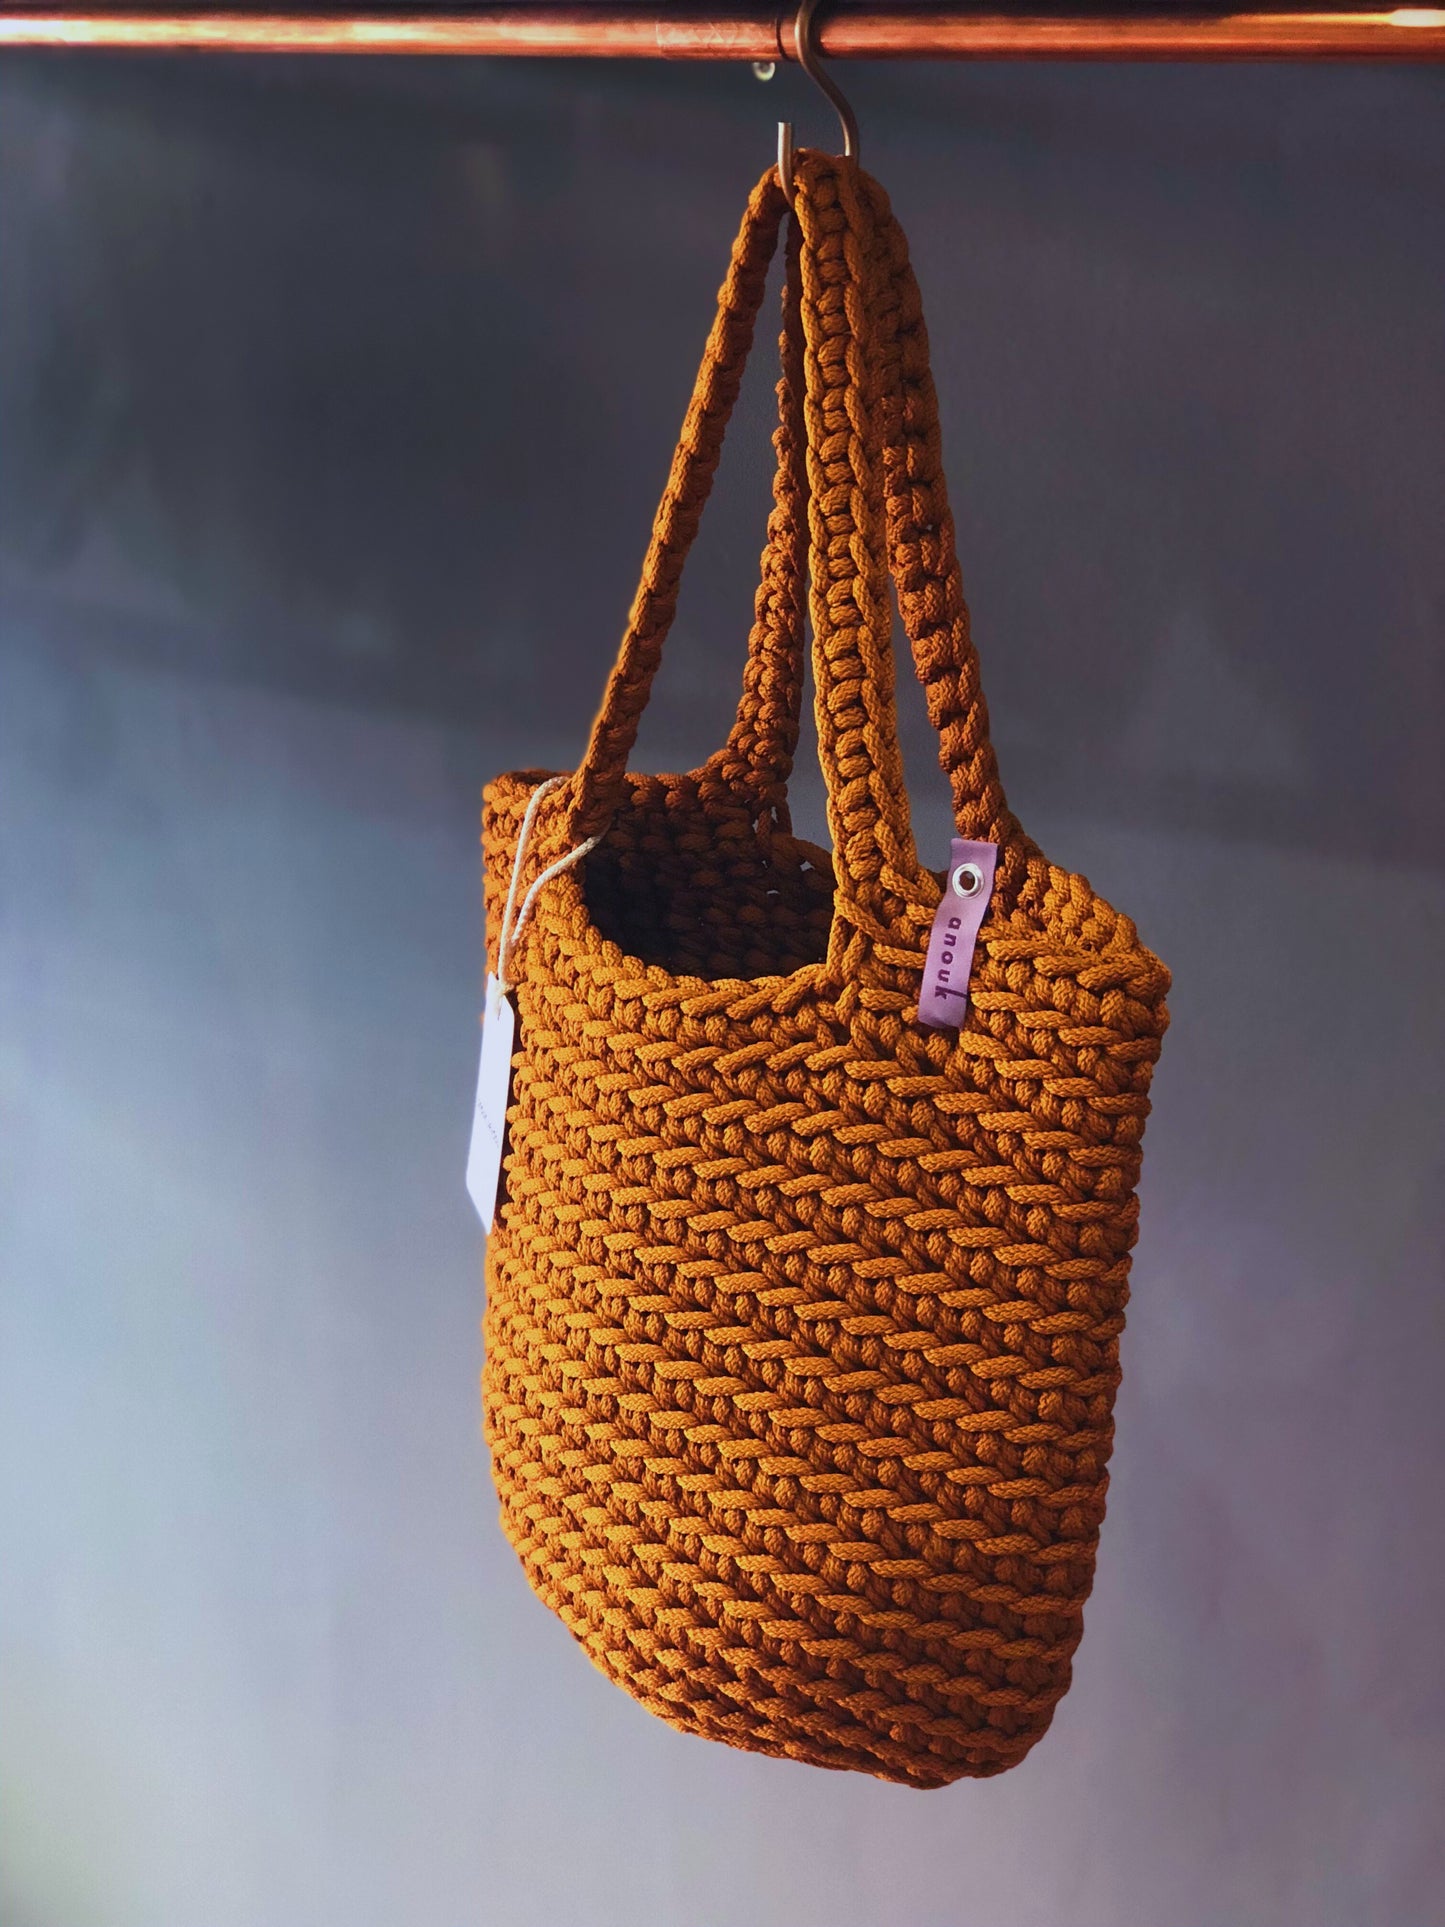 Scandinavian Style Tote Bag Long Handles Handmade